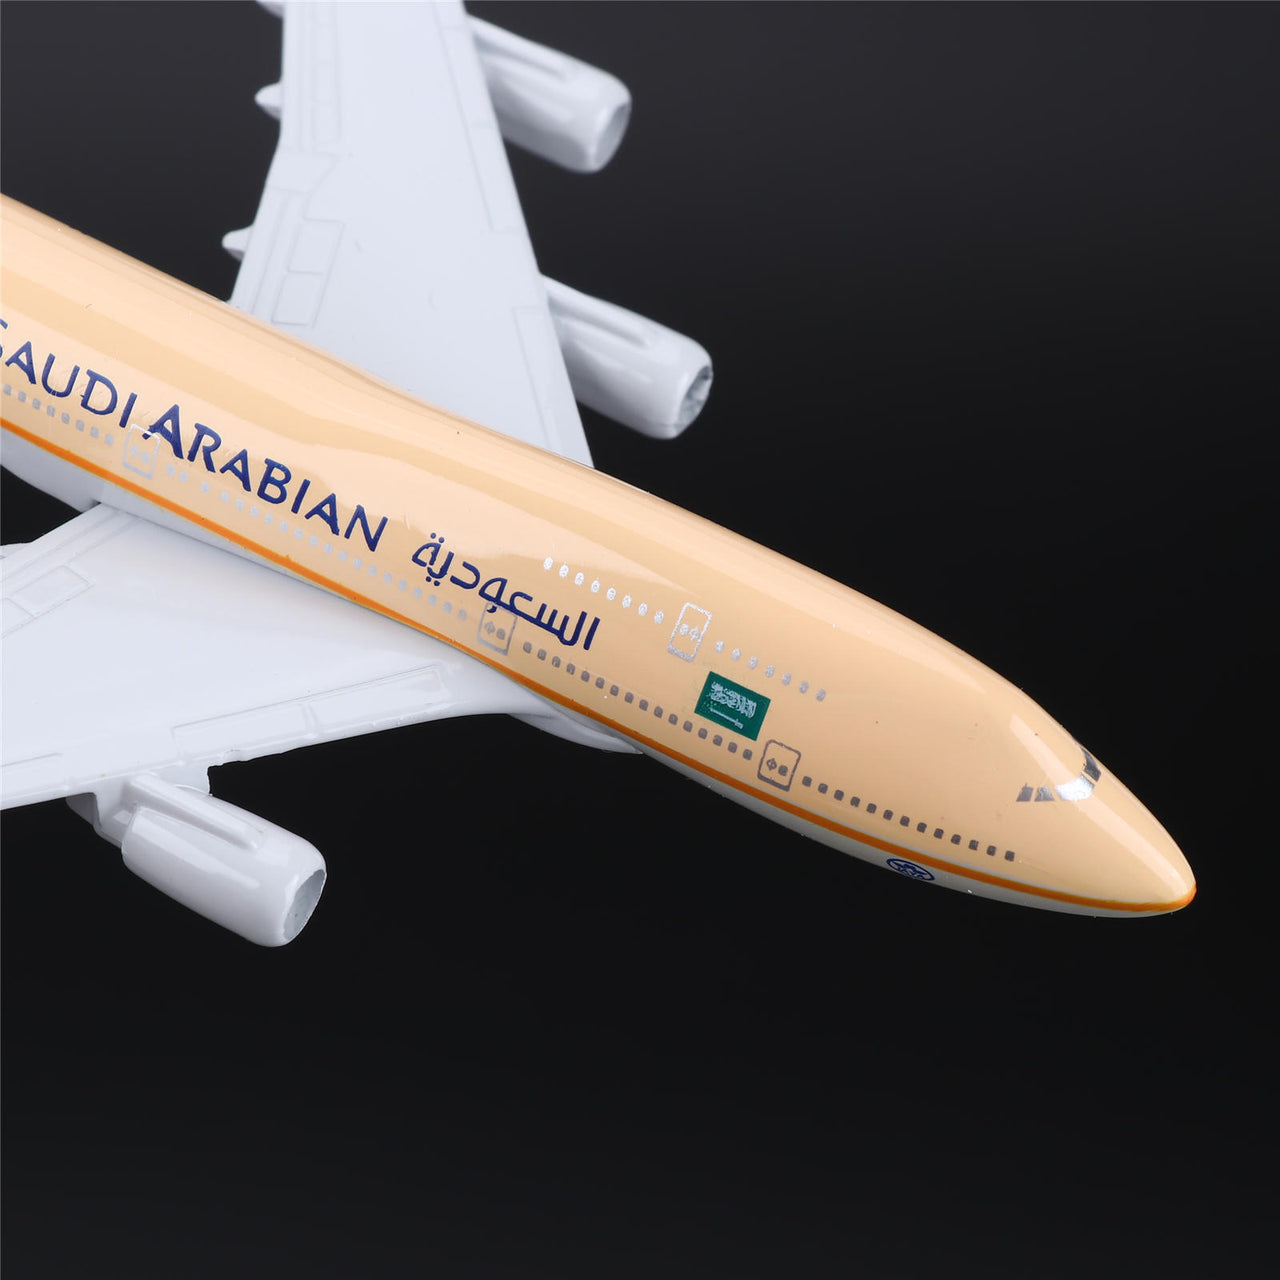 Saudi Arabian A380 Airline Model